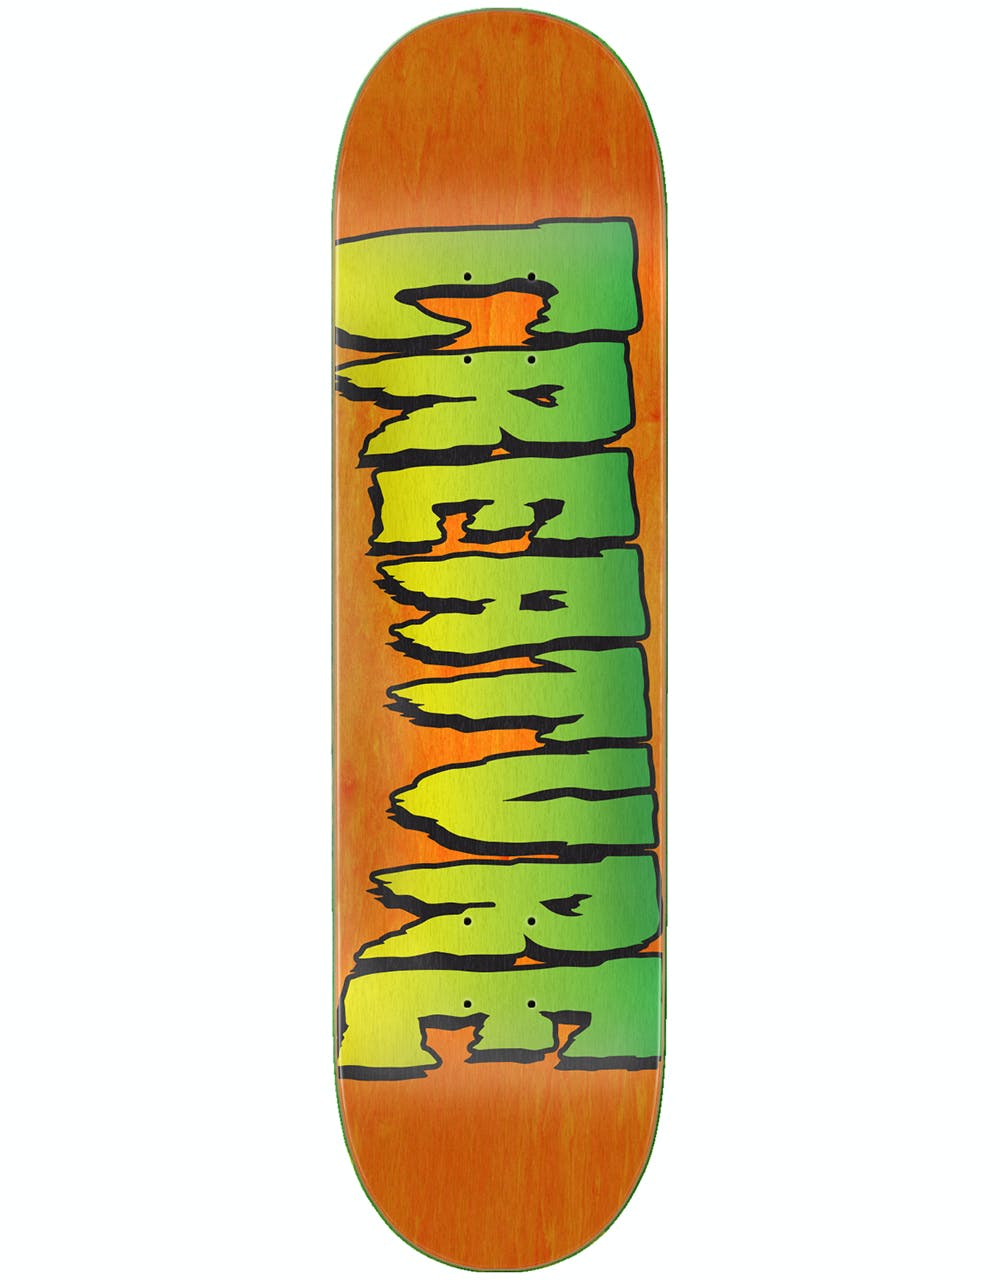 Creature Logo Stump Skateboard Deck - 8.5"